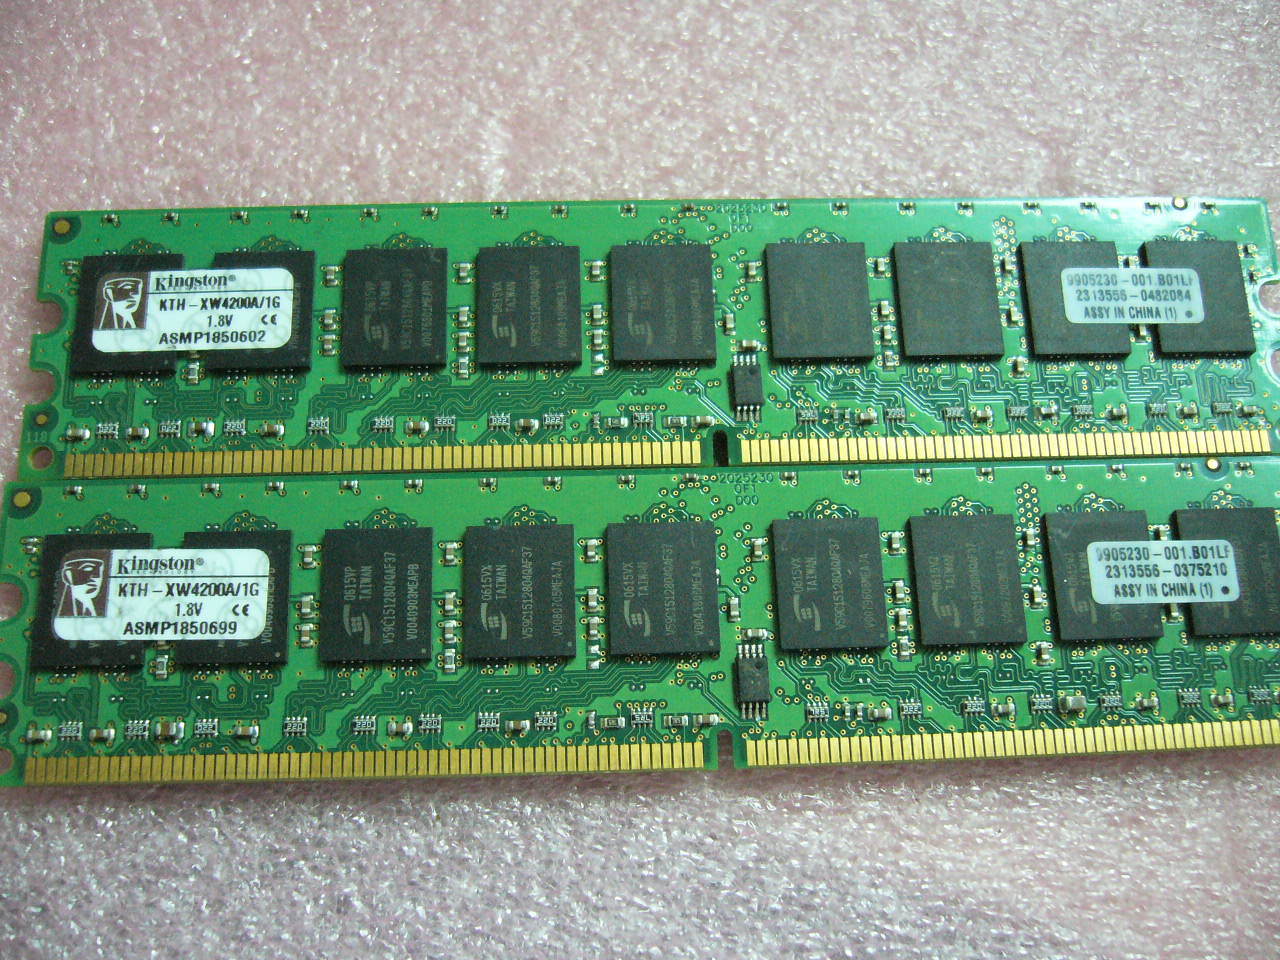 QTY 1x 1GB DDR2 PC2-4200E 533Mhz ECC workstation memory Kingston KTH-XW4200A/1G - Click Image to Close